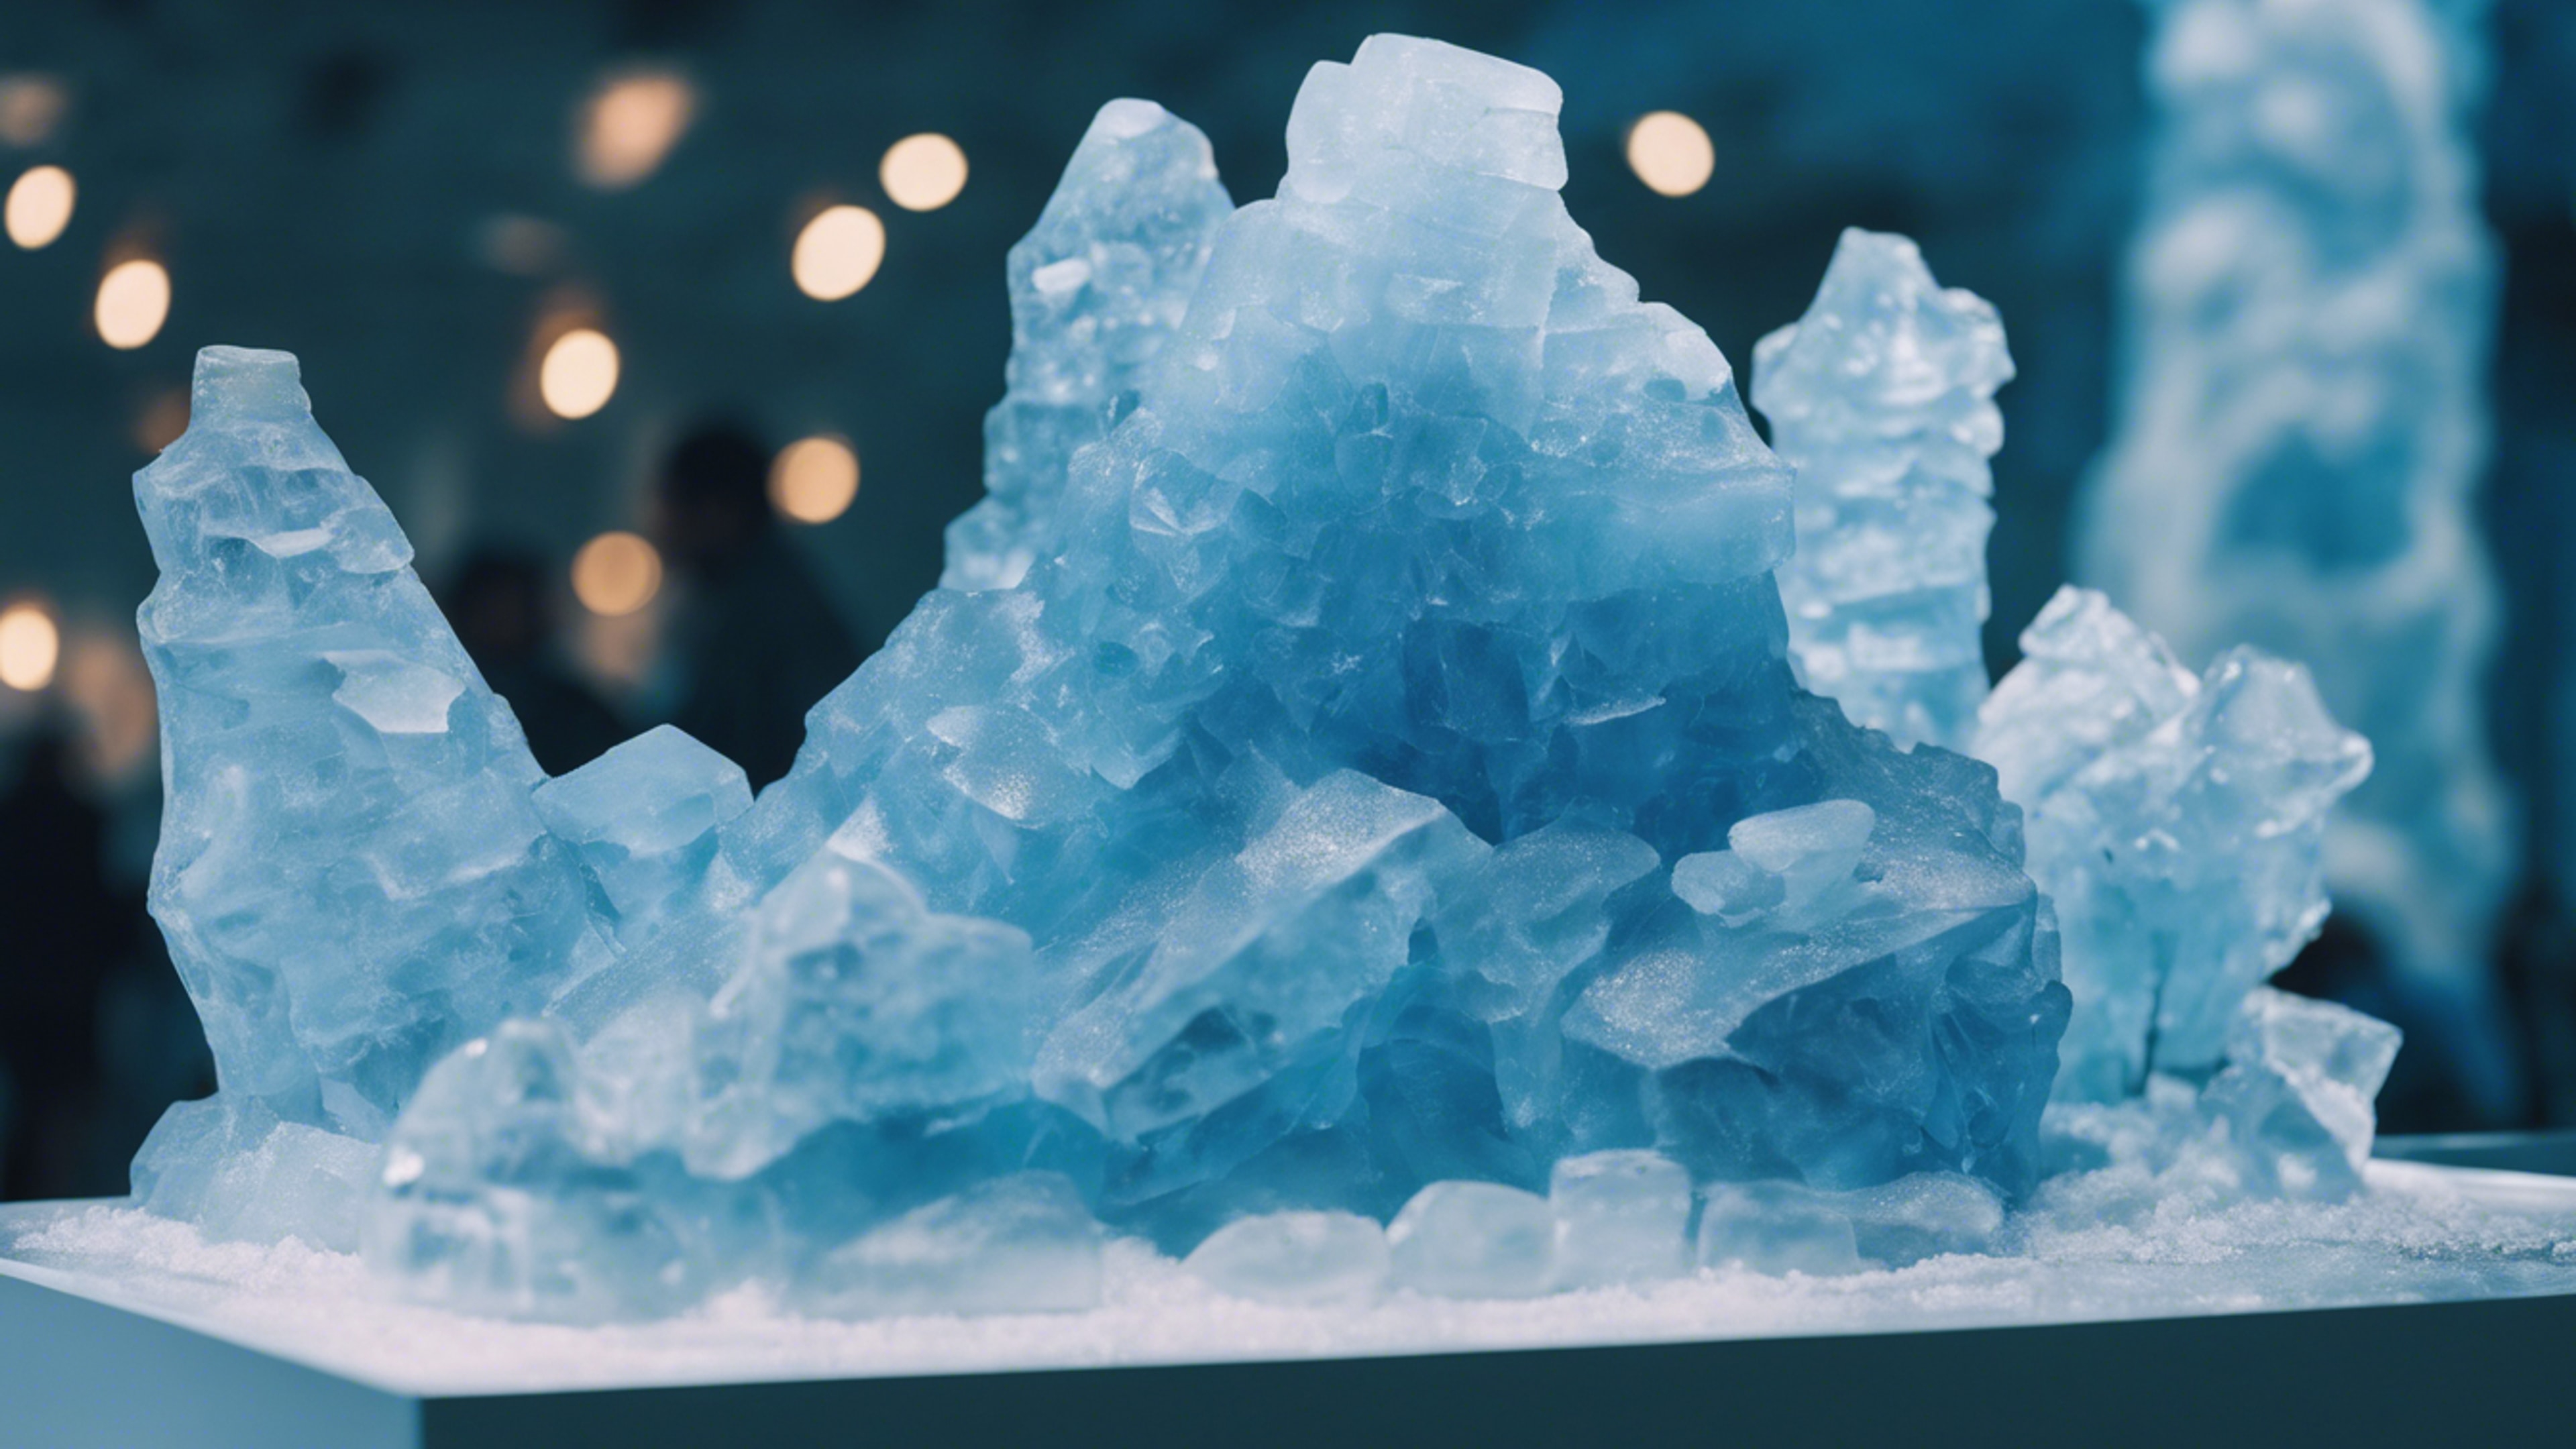 A cool blue ice sculpture displayed in an art exhibition Fondo de pantalla[01392a1631a945a38e16]